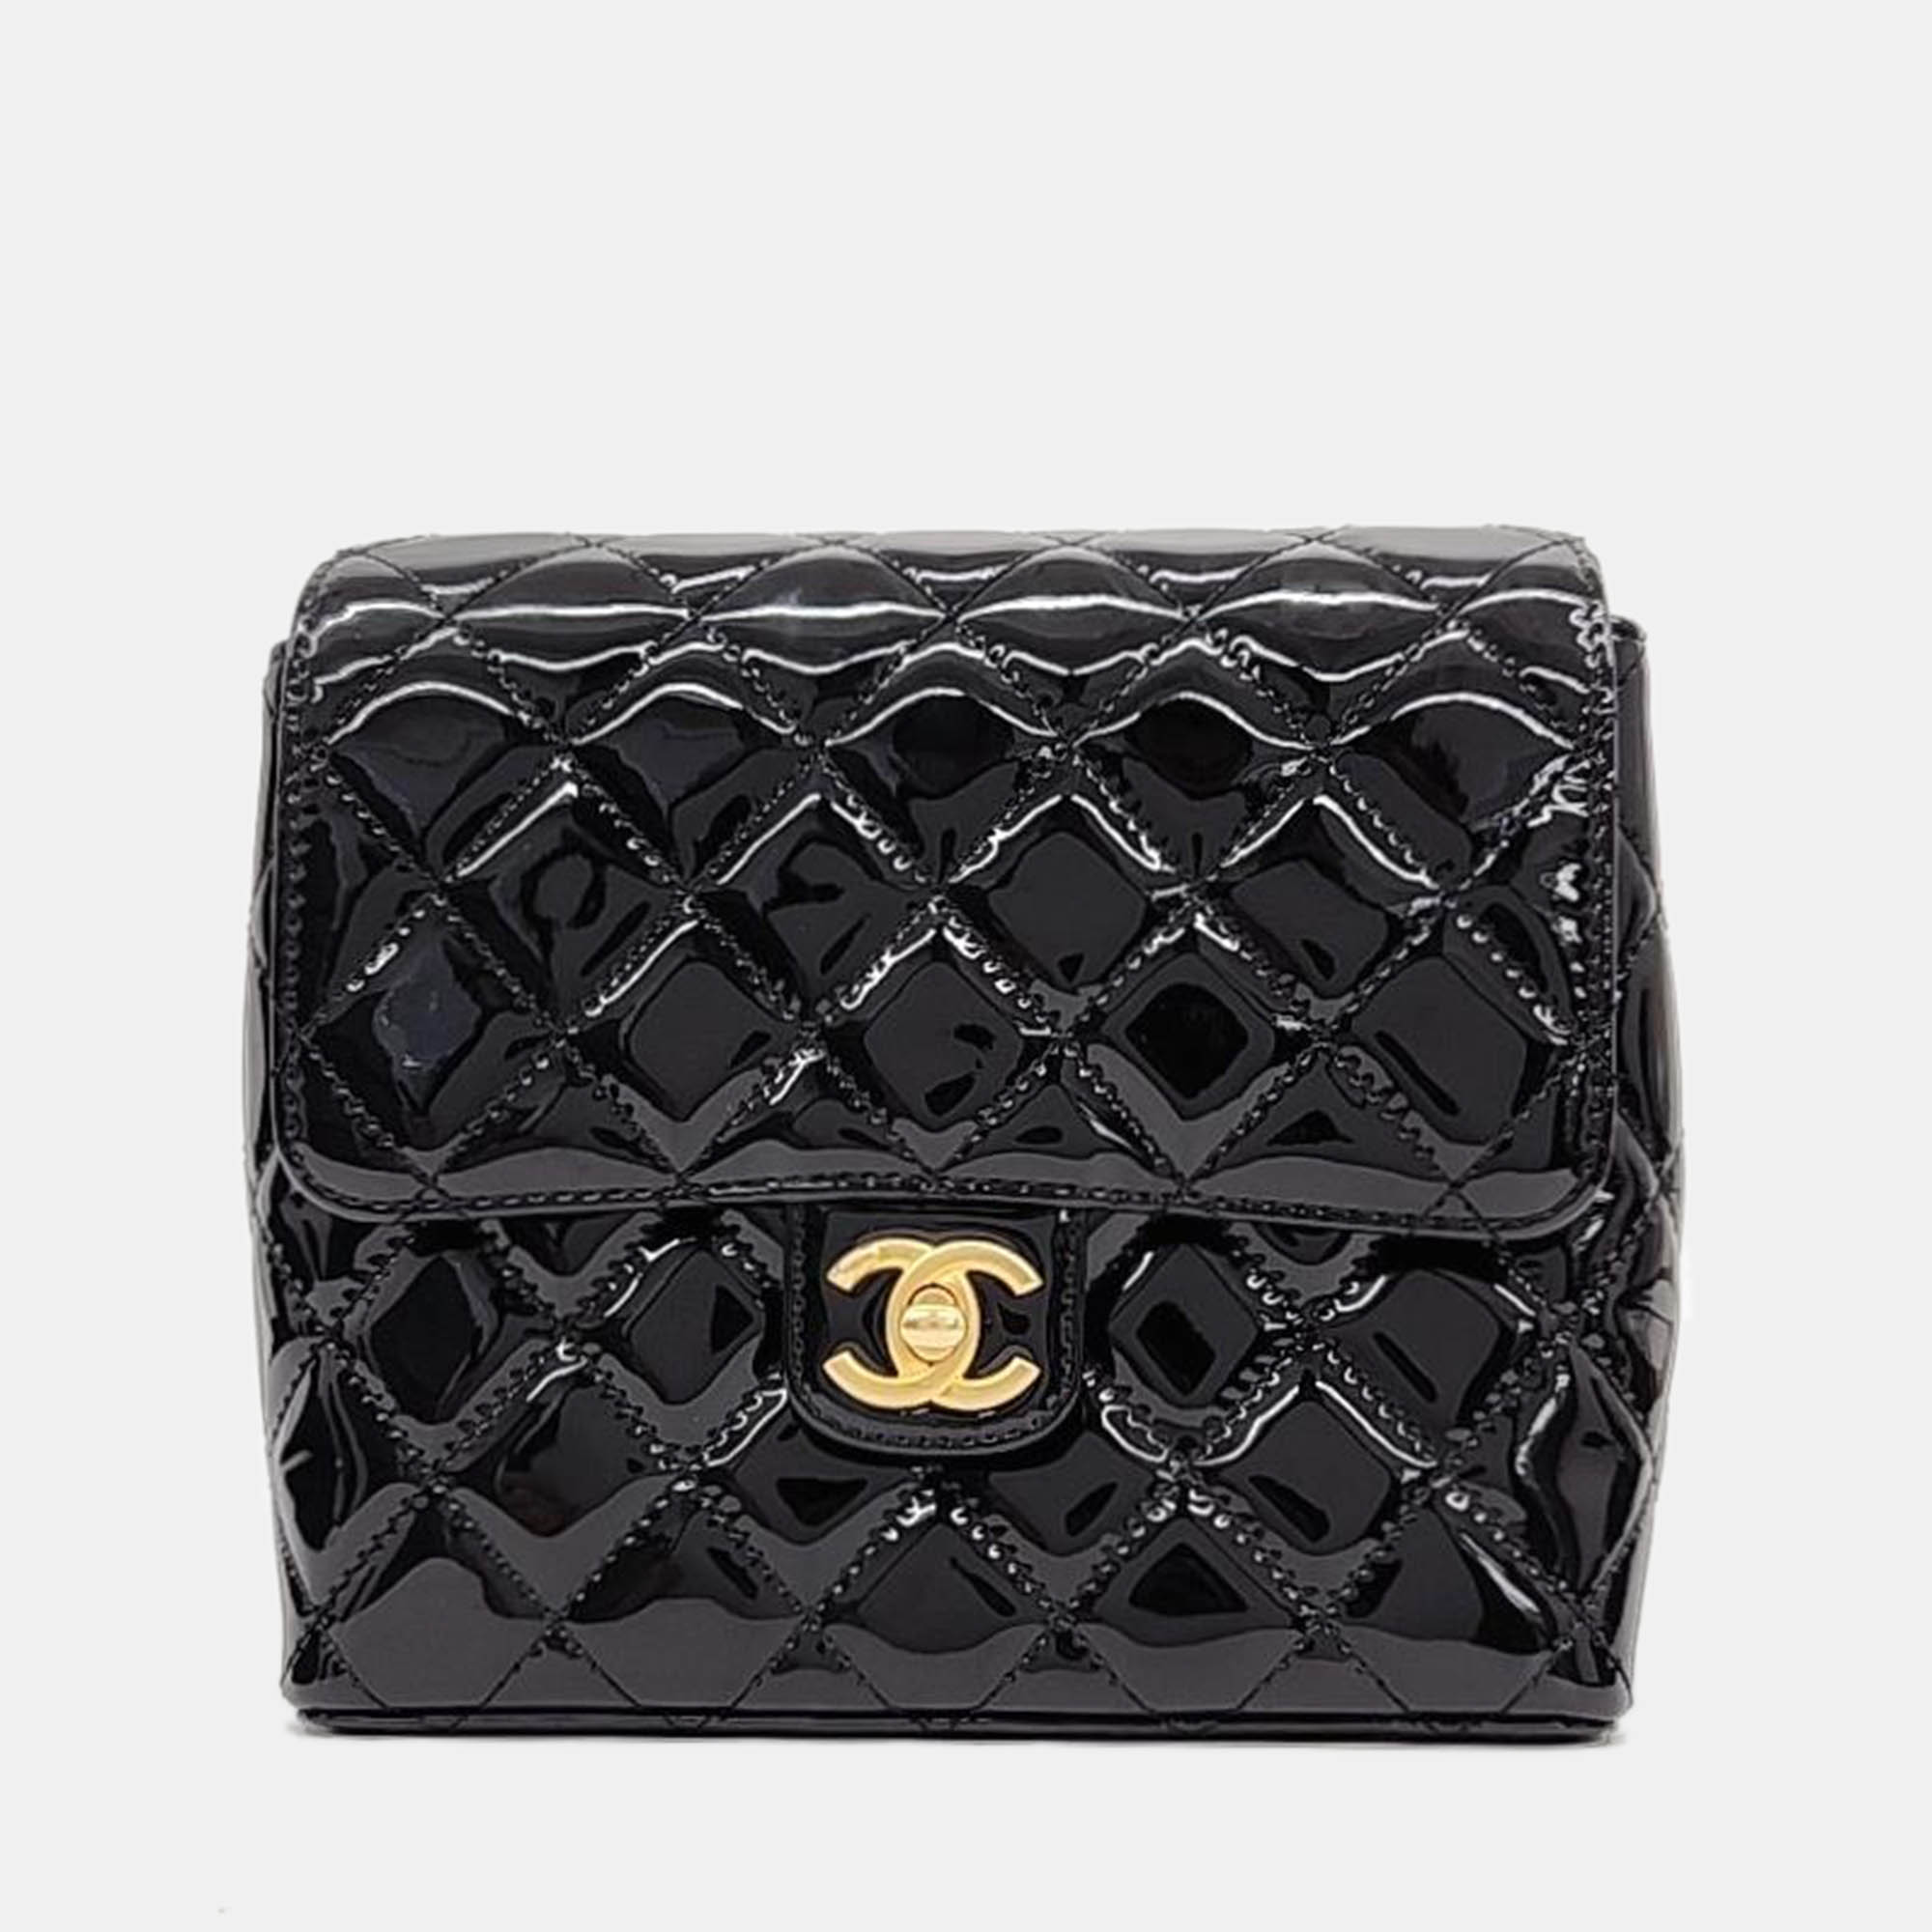 Chanel Black Leather Pedant Flap Bag